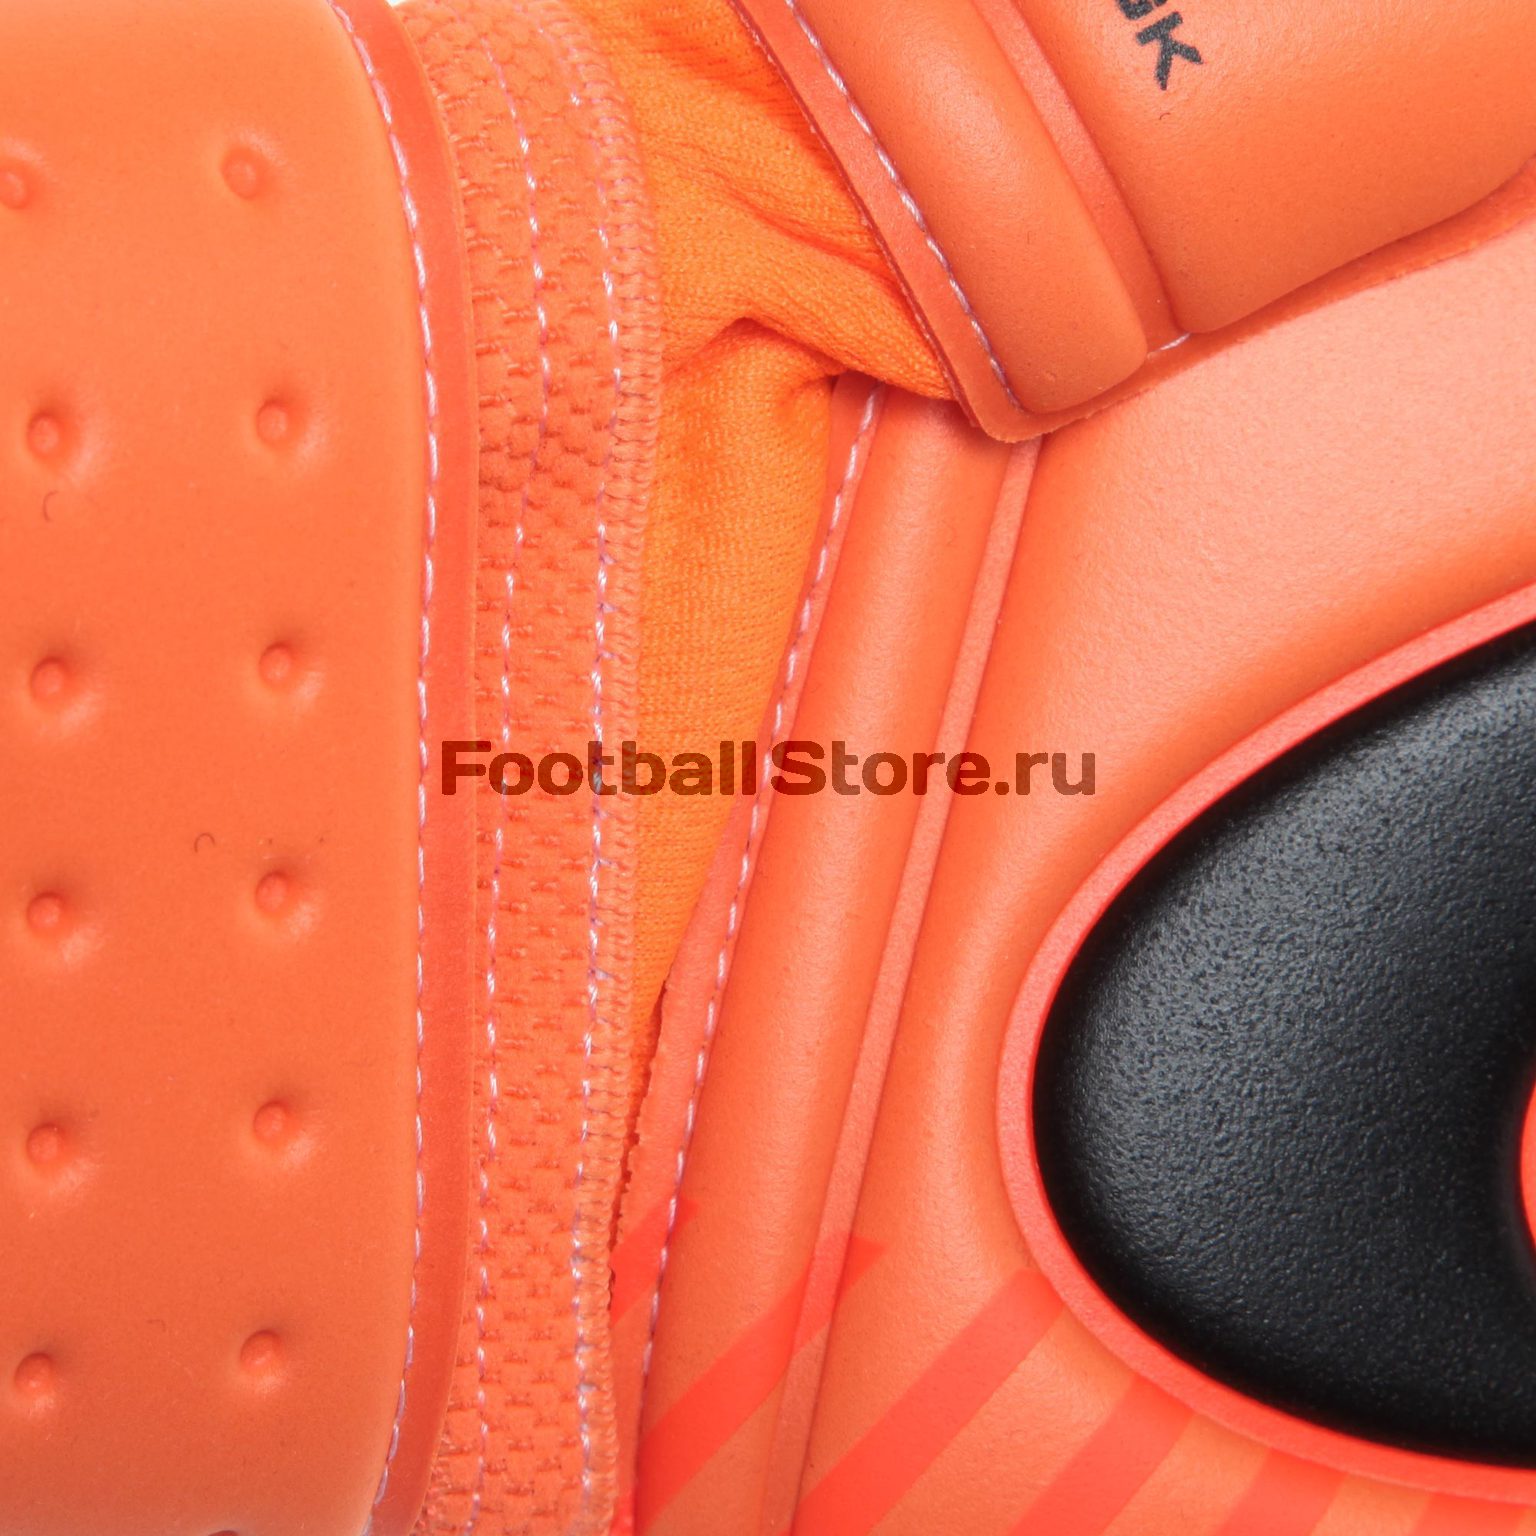 Перчатки вратарские Nike NK GK Premier SGT GS0345-803